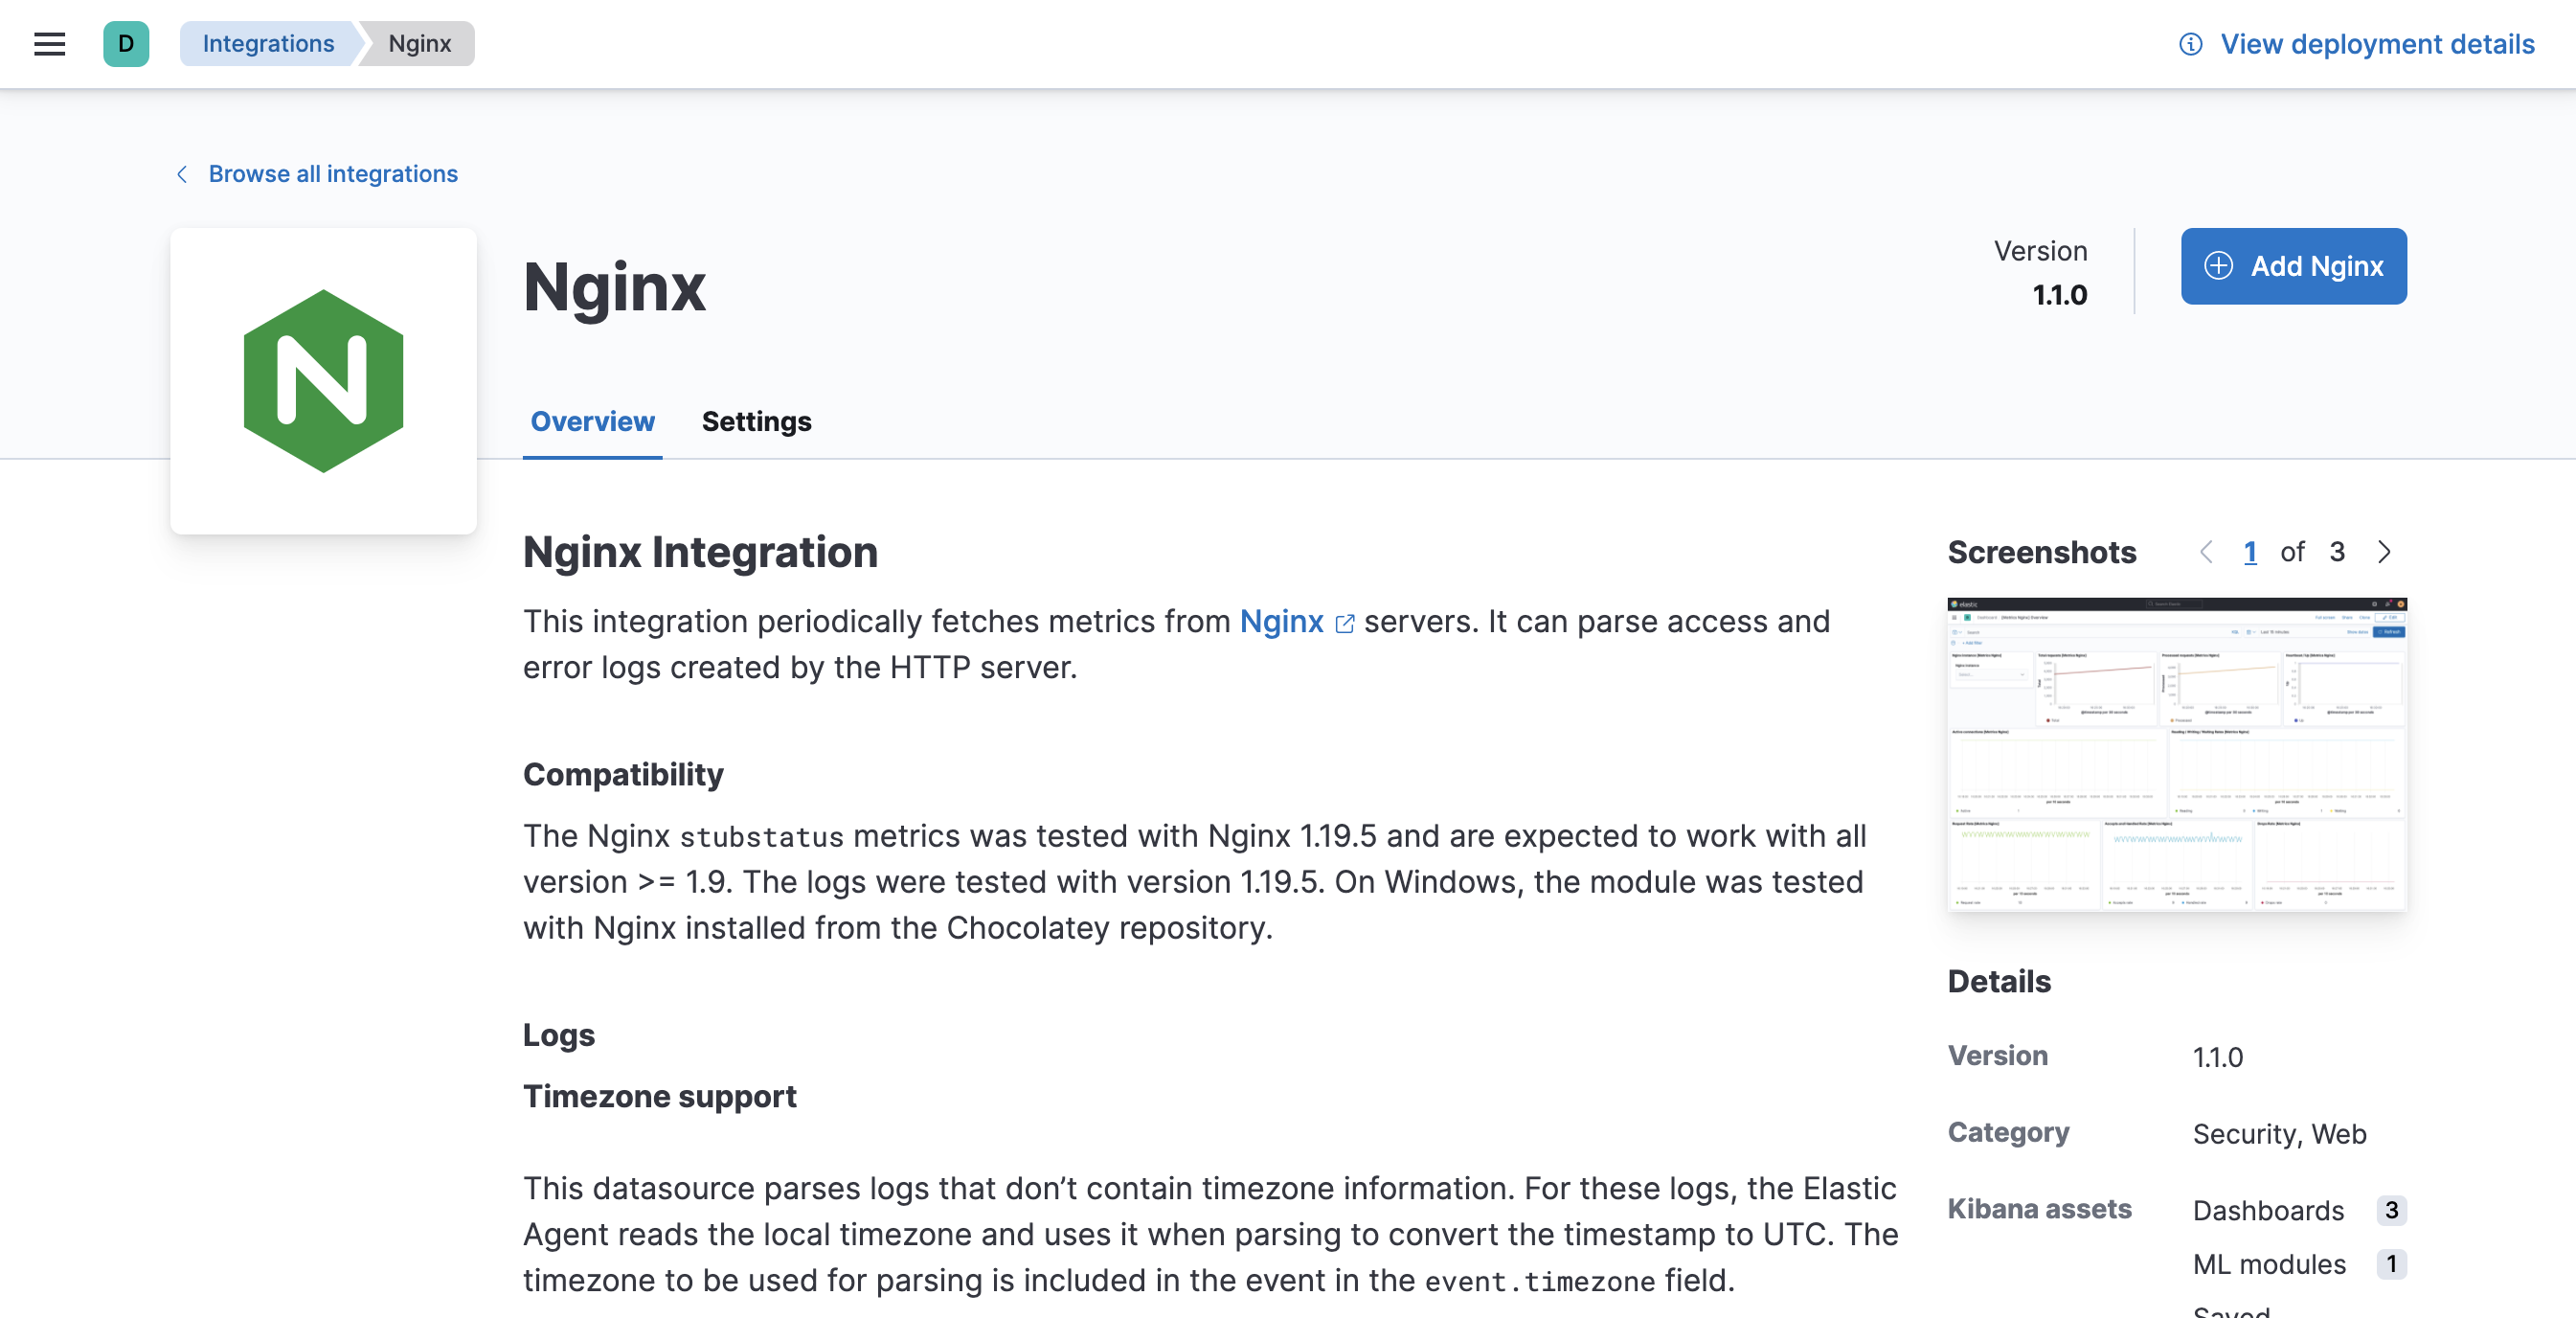 Fleet showing Nginx integration overview